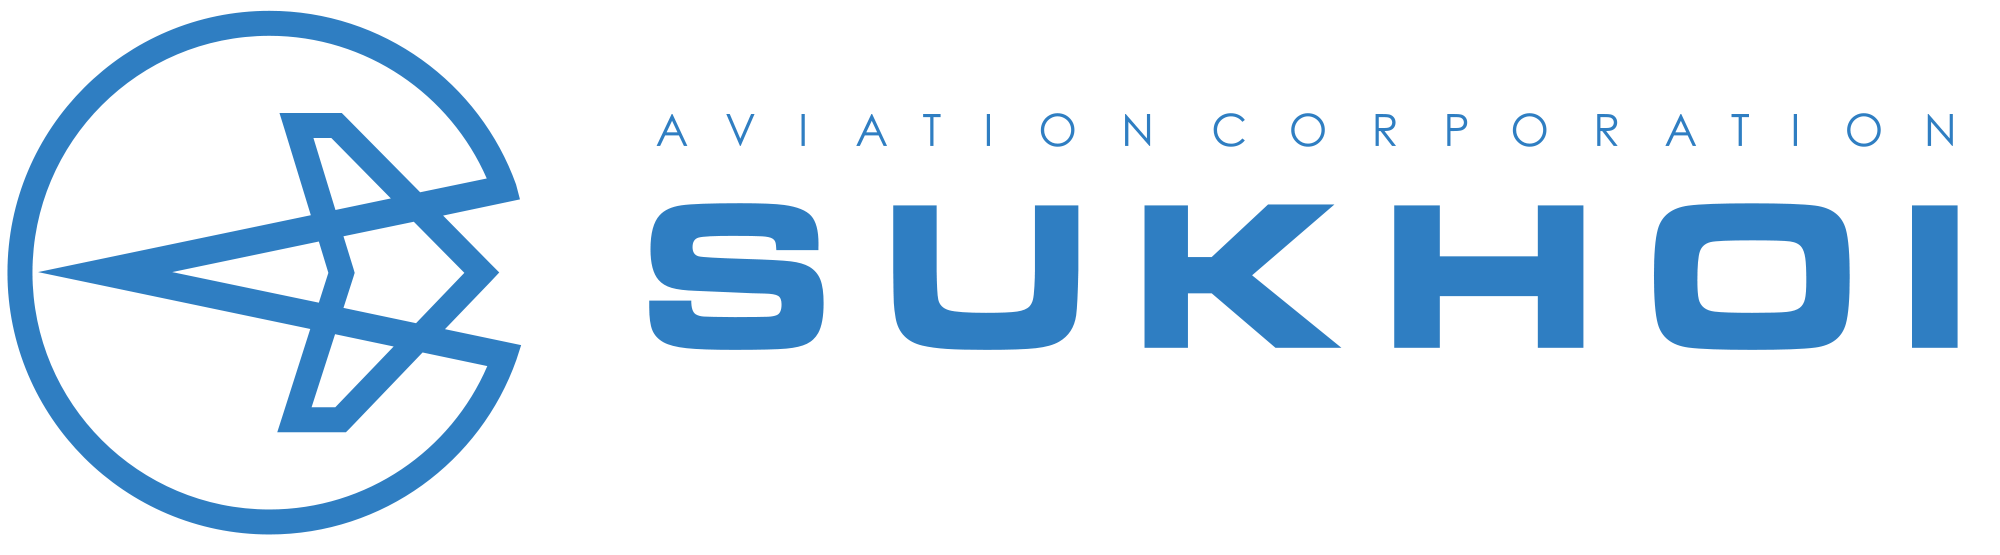 Aircraft Company Logo - Sukhoi Civil Aircraft Company